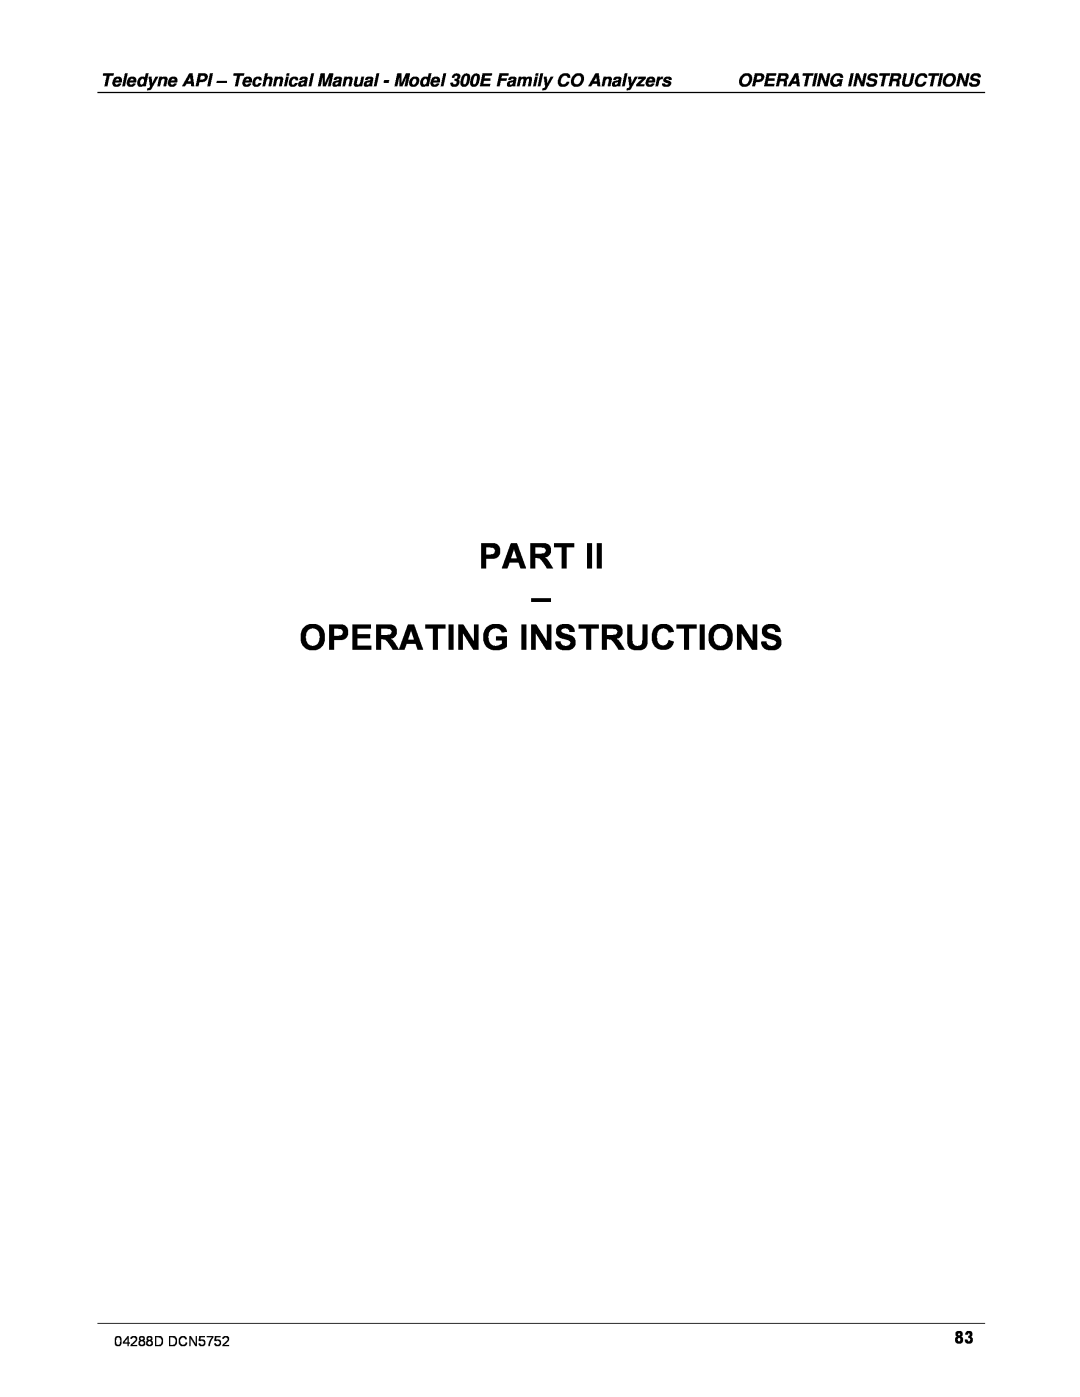 Teledyne M300EM operation manual Part – Operating Instructions 